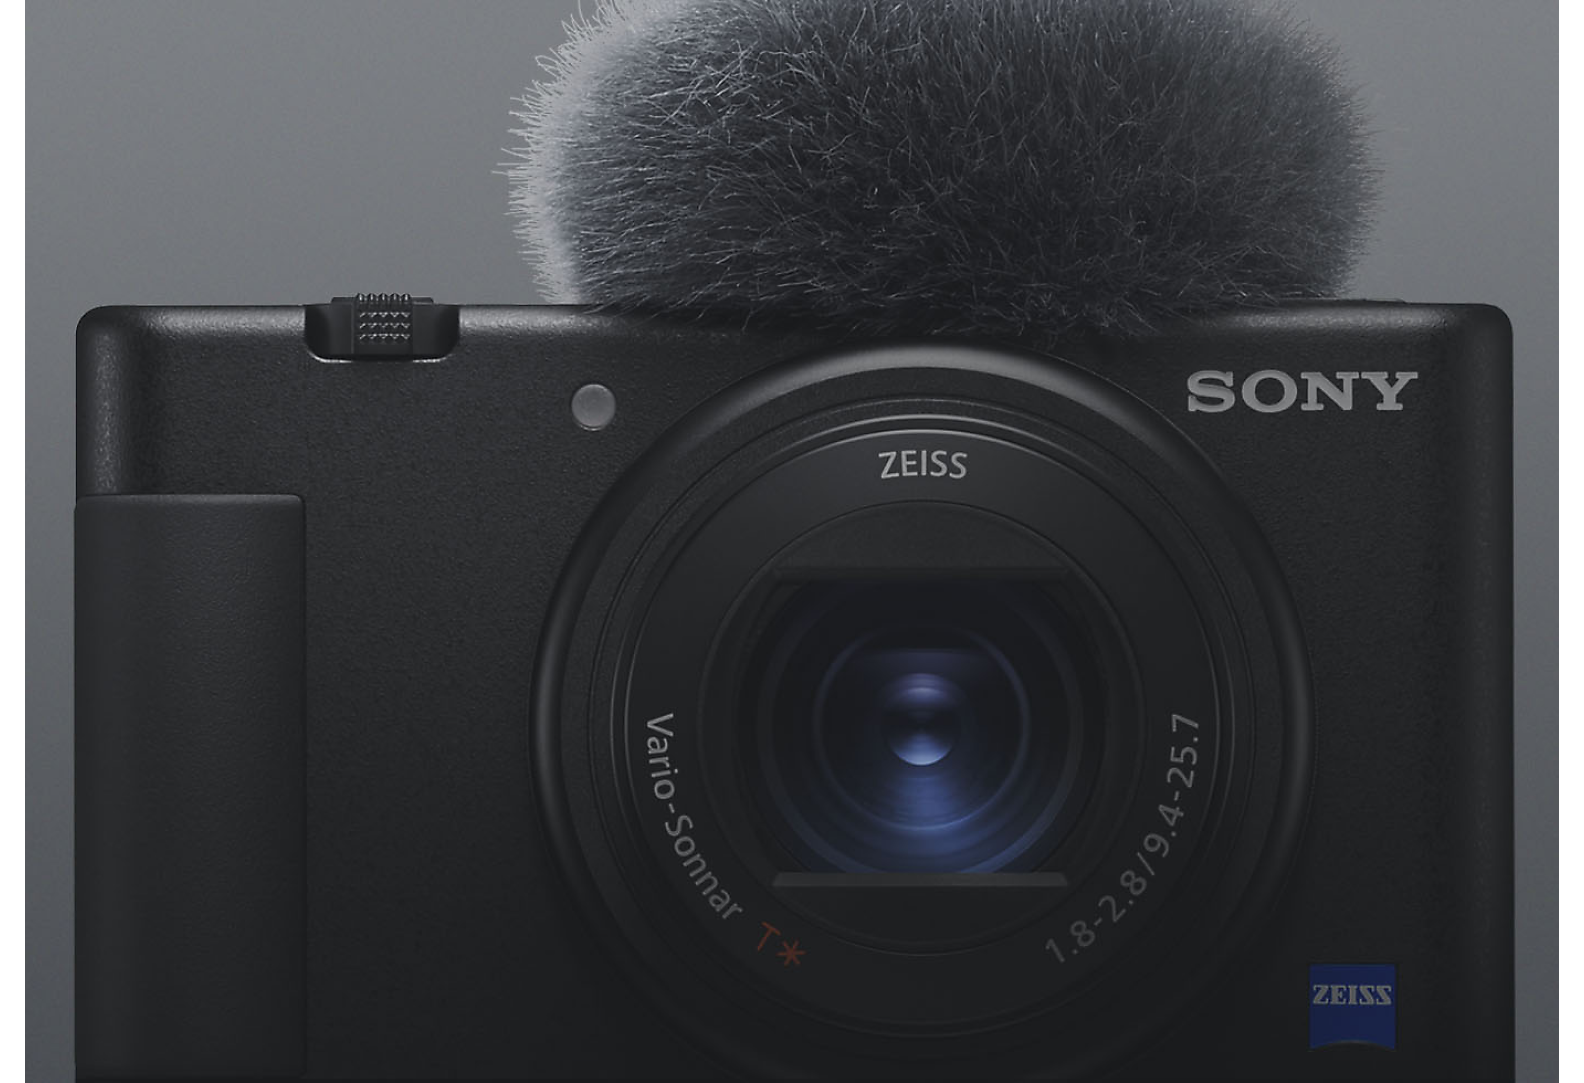 Tampak depan compact camera Sony warna hitam dengan mikrofon terpasang